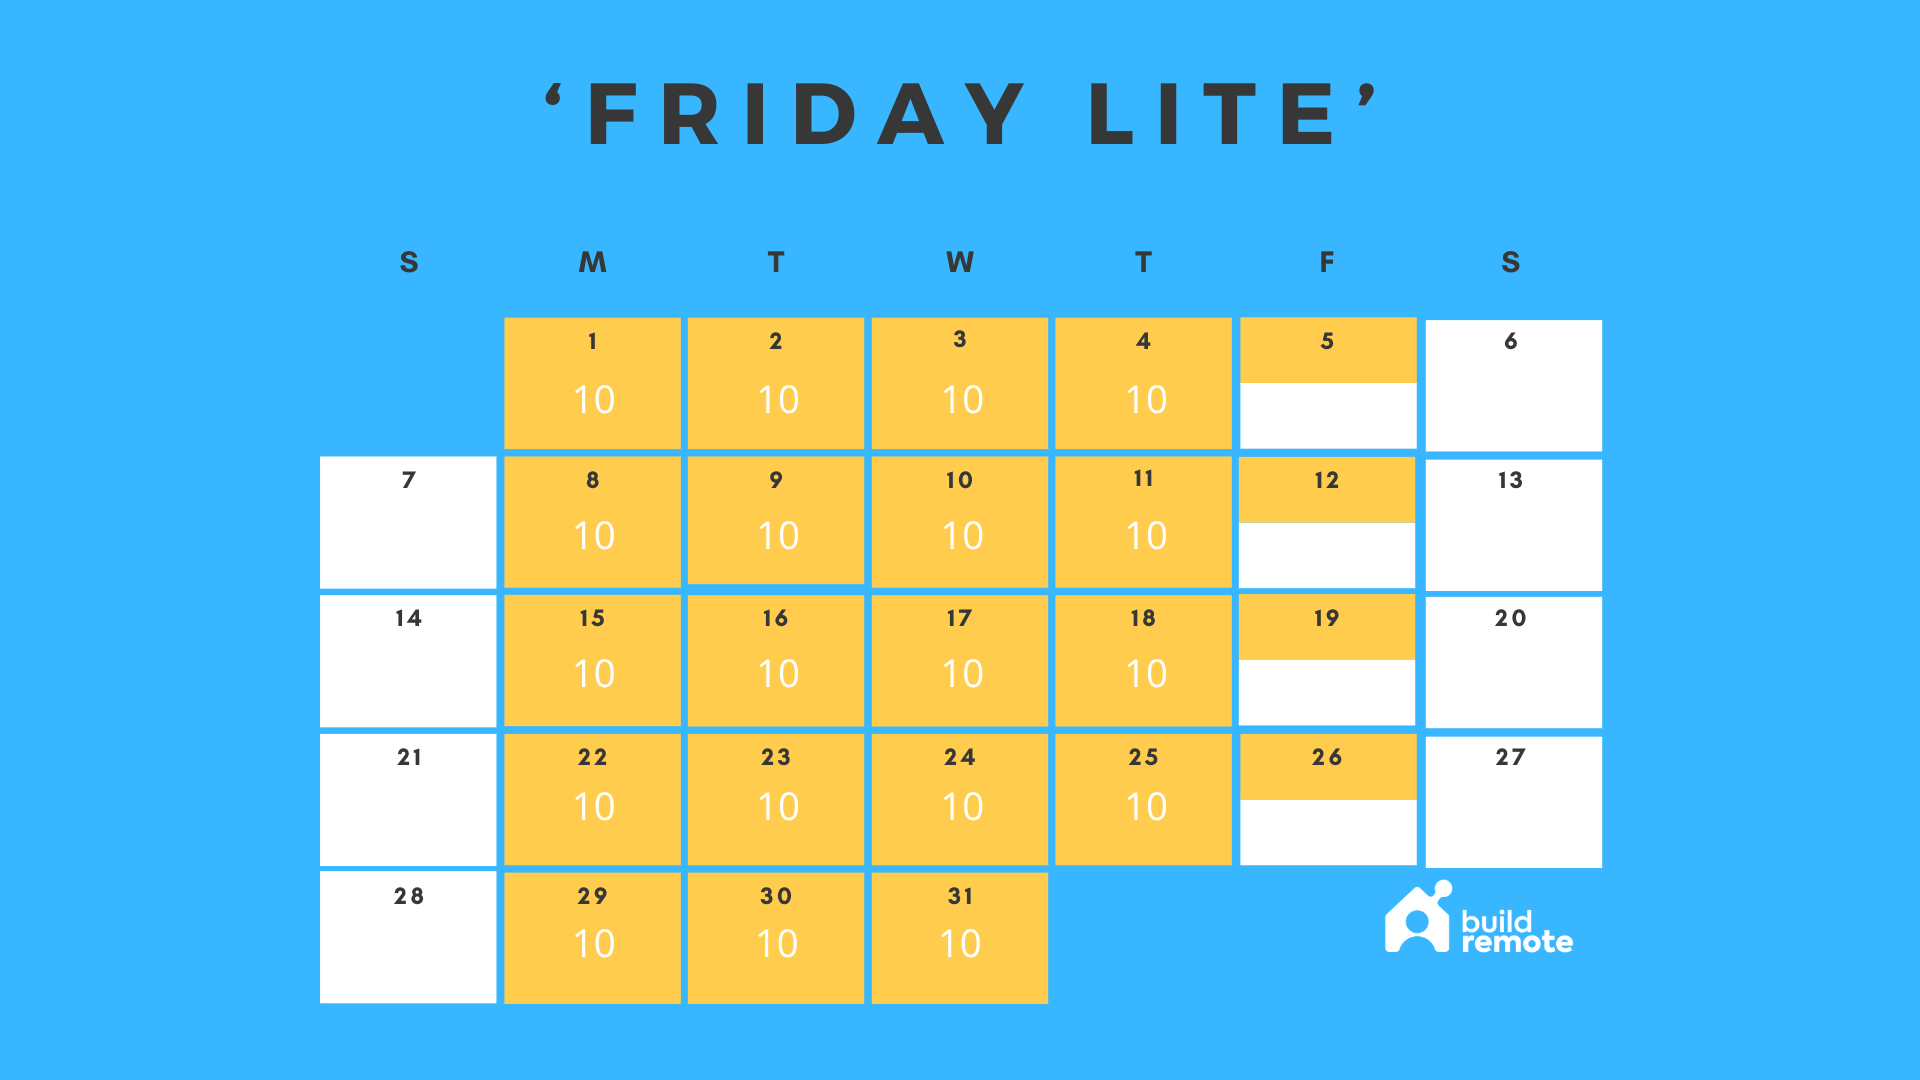 Friday-lite Flexible Schedule